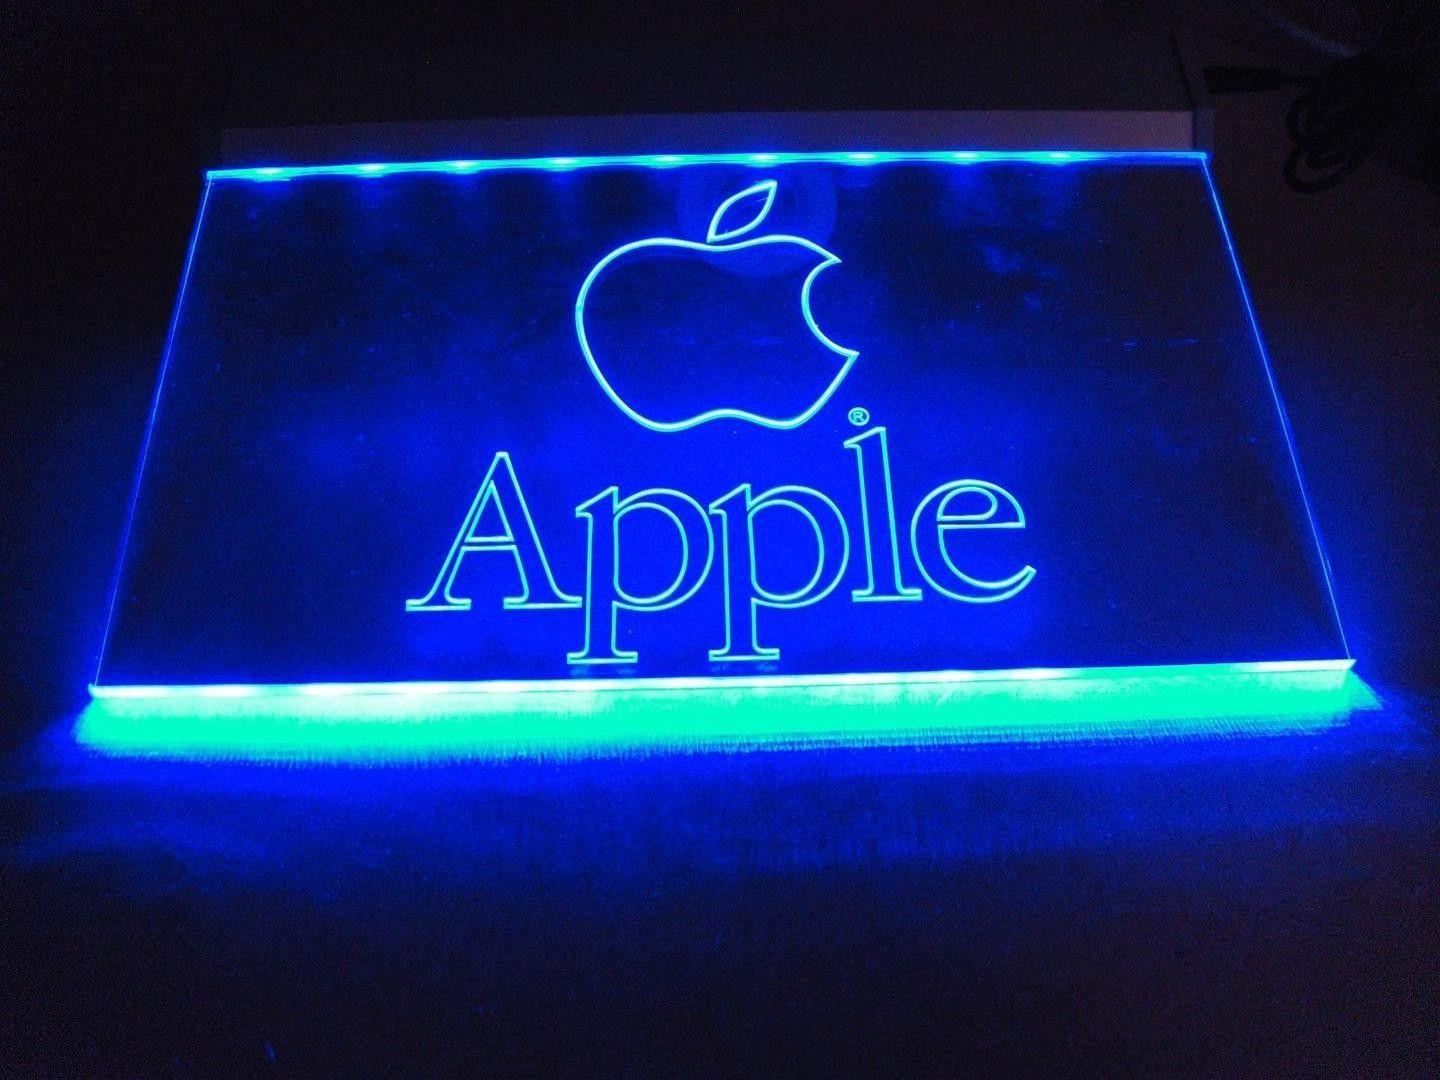 Cool Apple Logo - Super Cool Apple Logo Blue Light Sign, In Original Package -WORKING ...